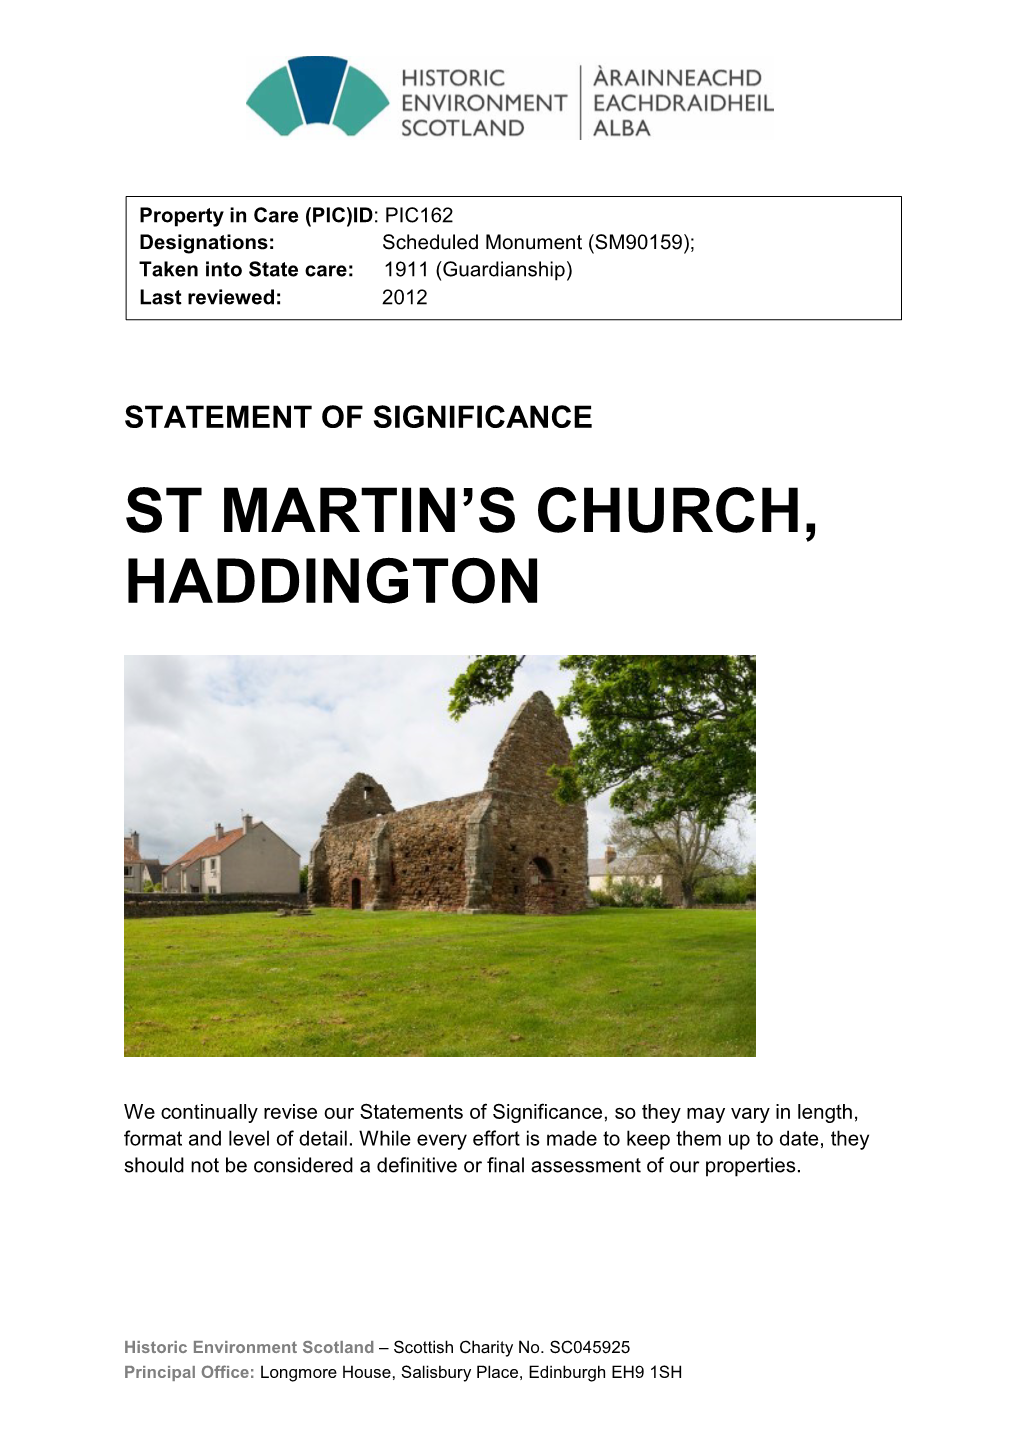 St. Martin's Church, Haddington Statement of Significance